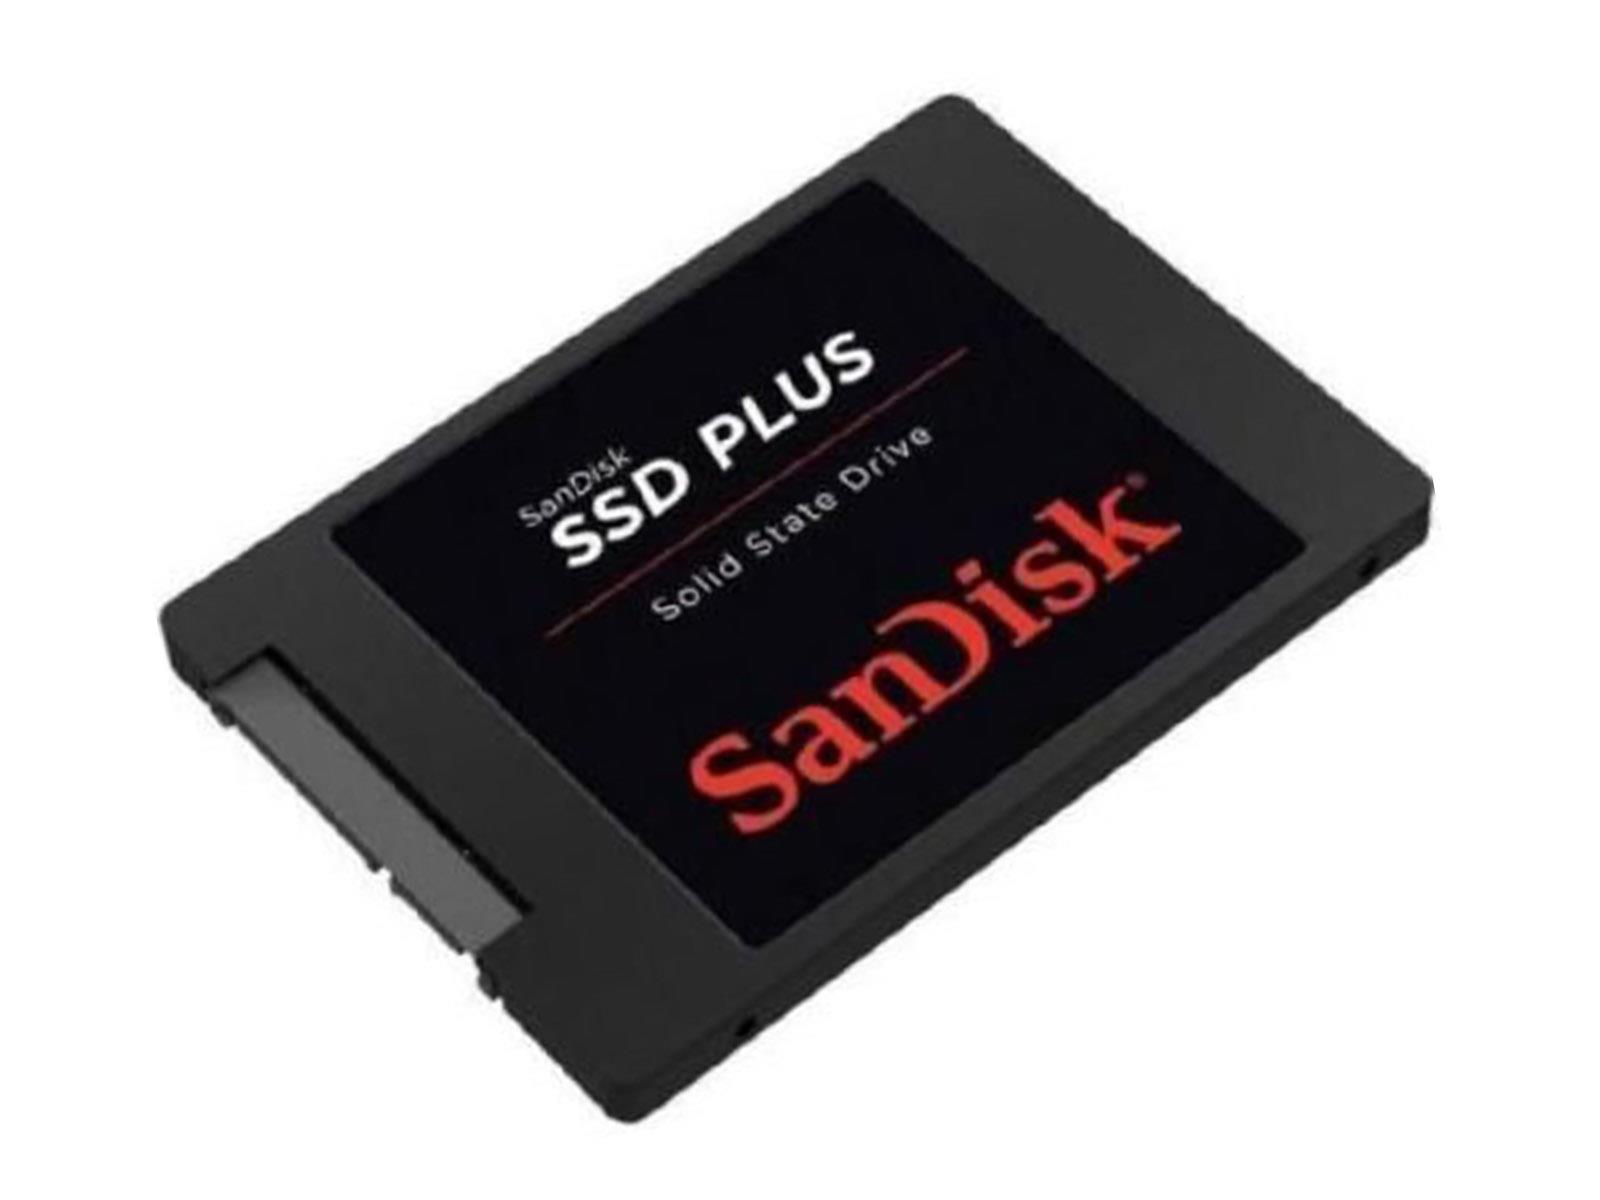 Sandisk PLUS 120gb SSD